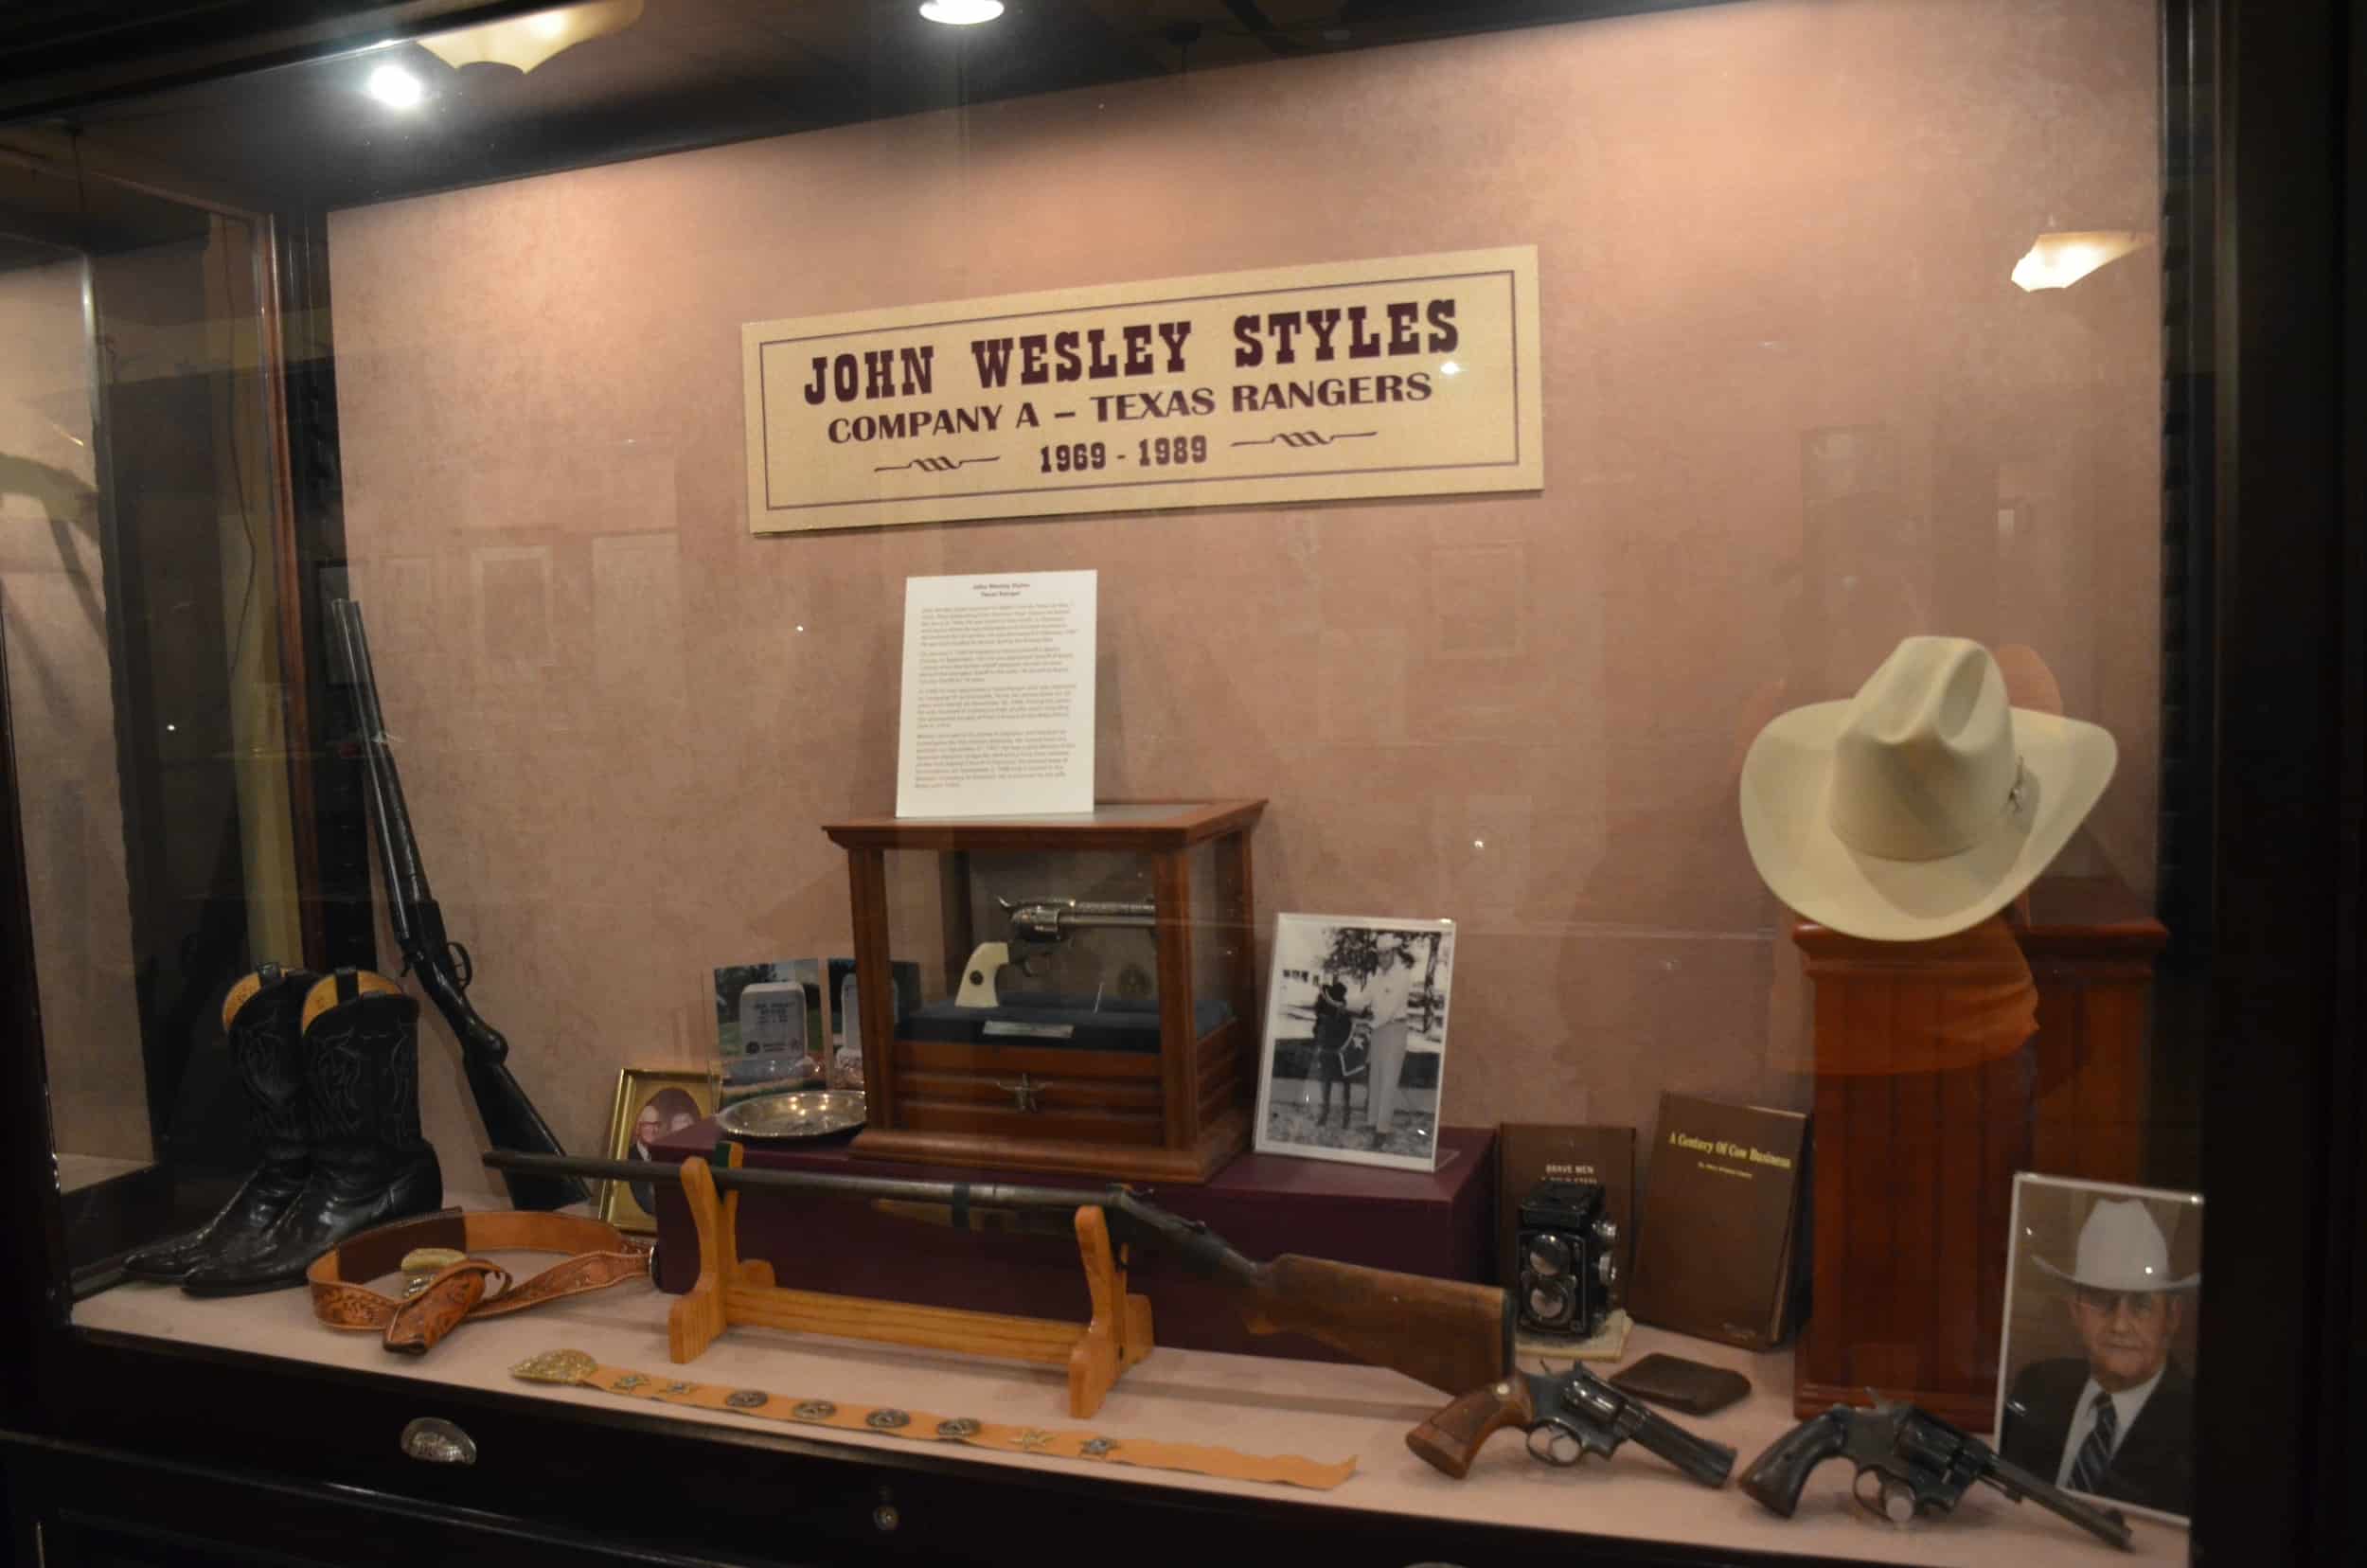 John Wesley Styles exhibit at the Texas Ranger Museum in San Antonio, Texas